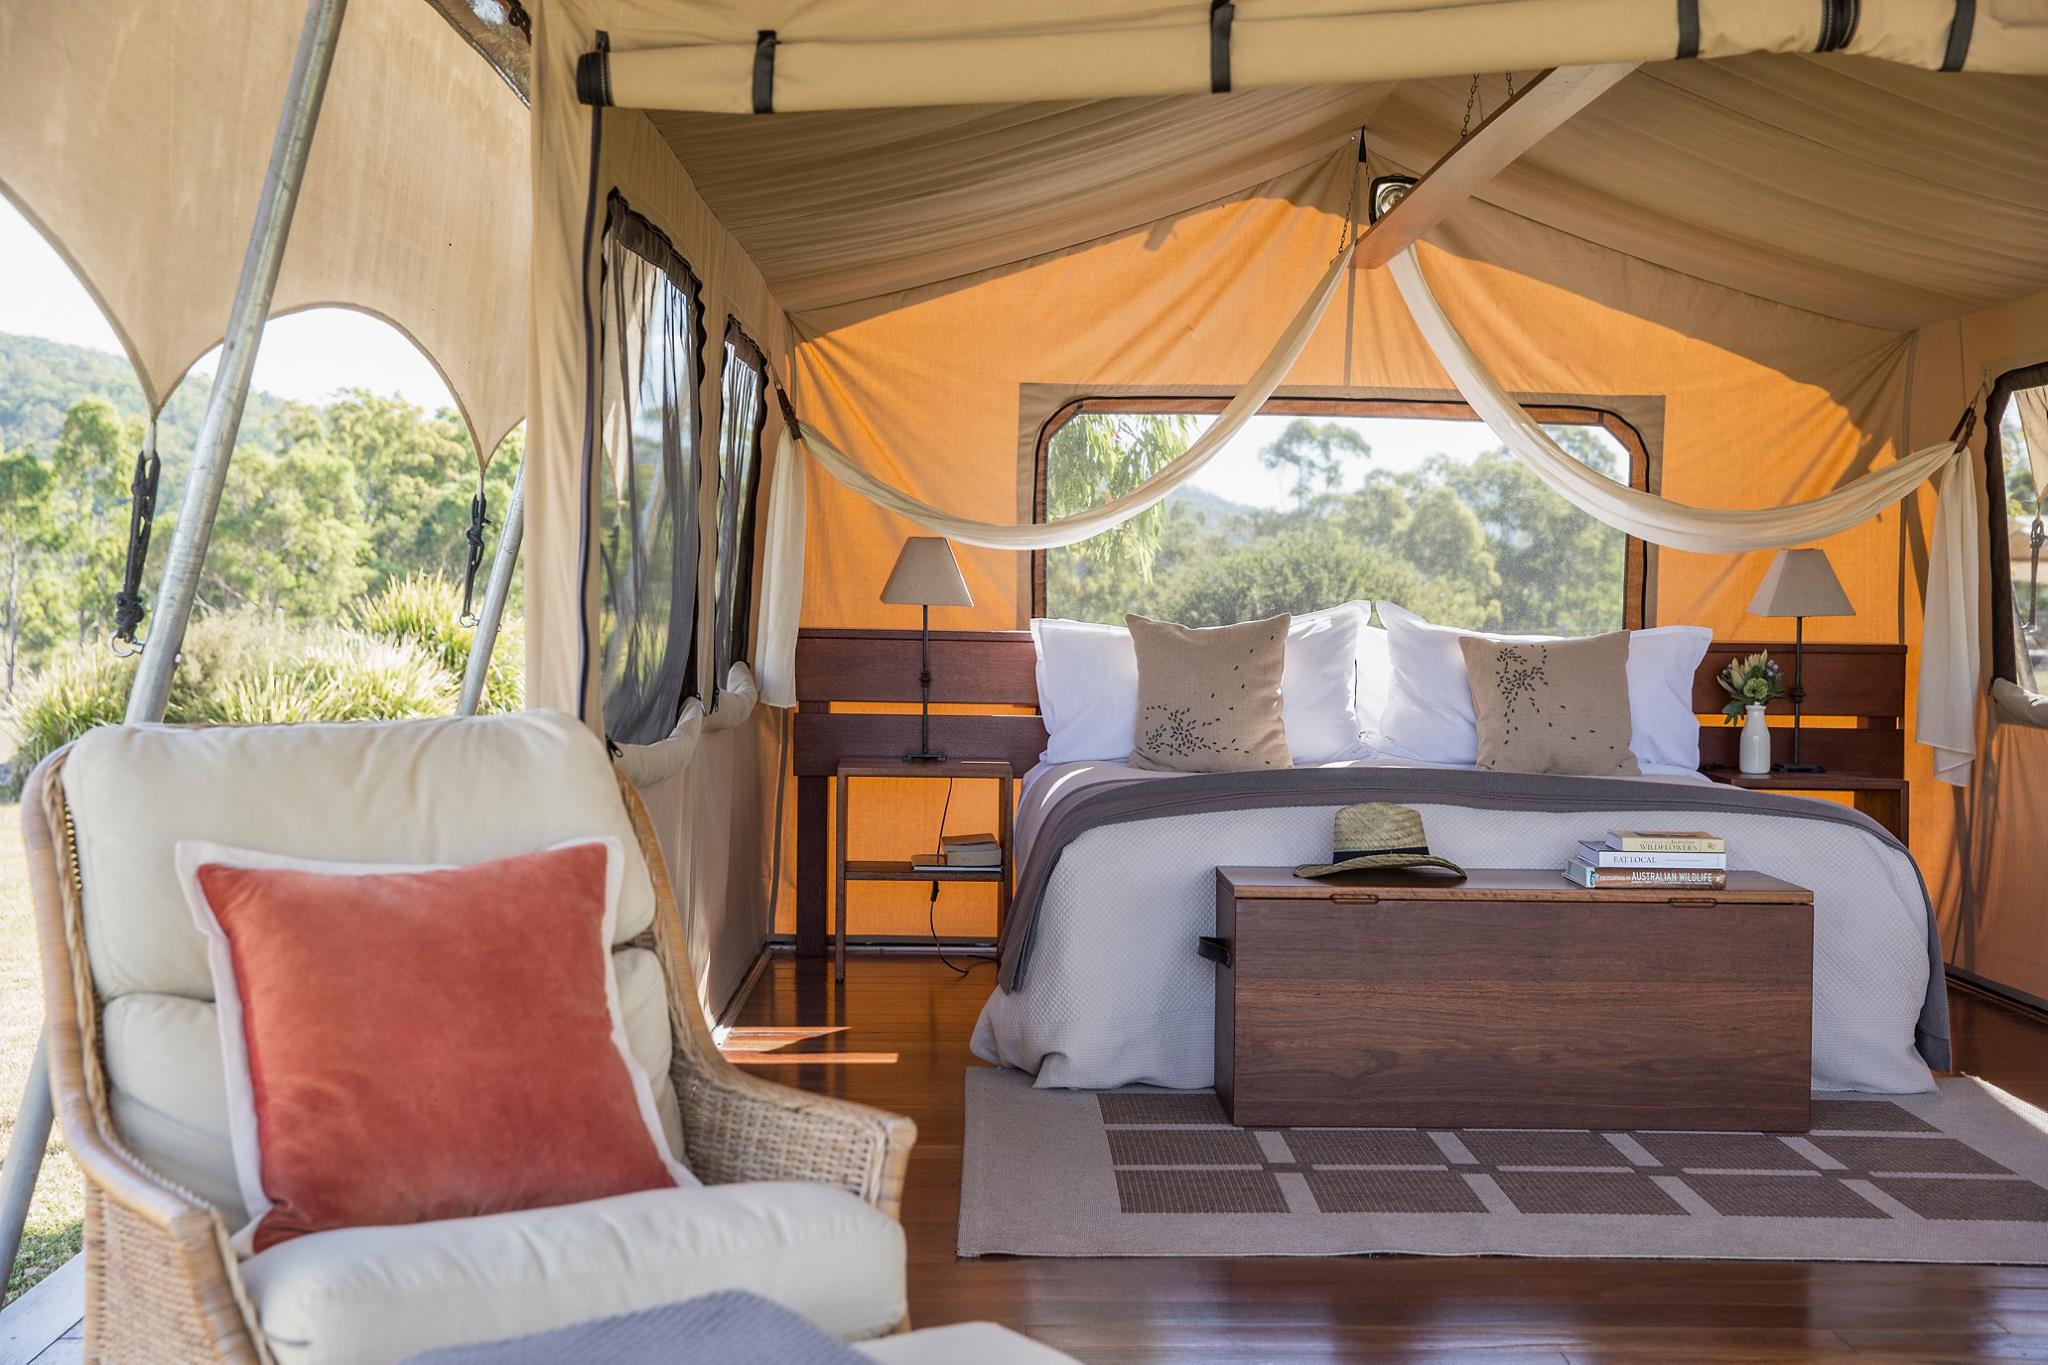 Luxury Safari Tents From Eco Tents Australia